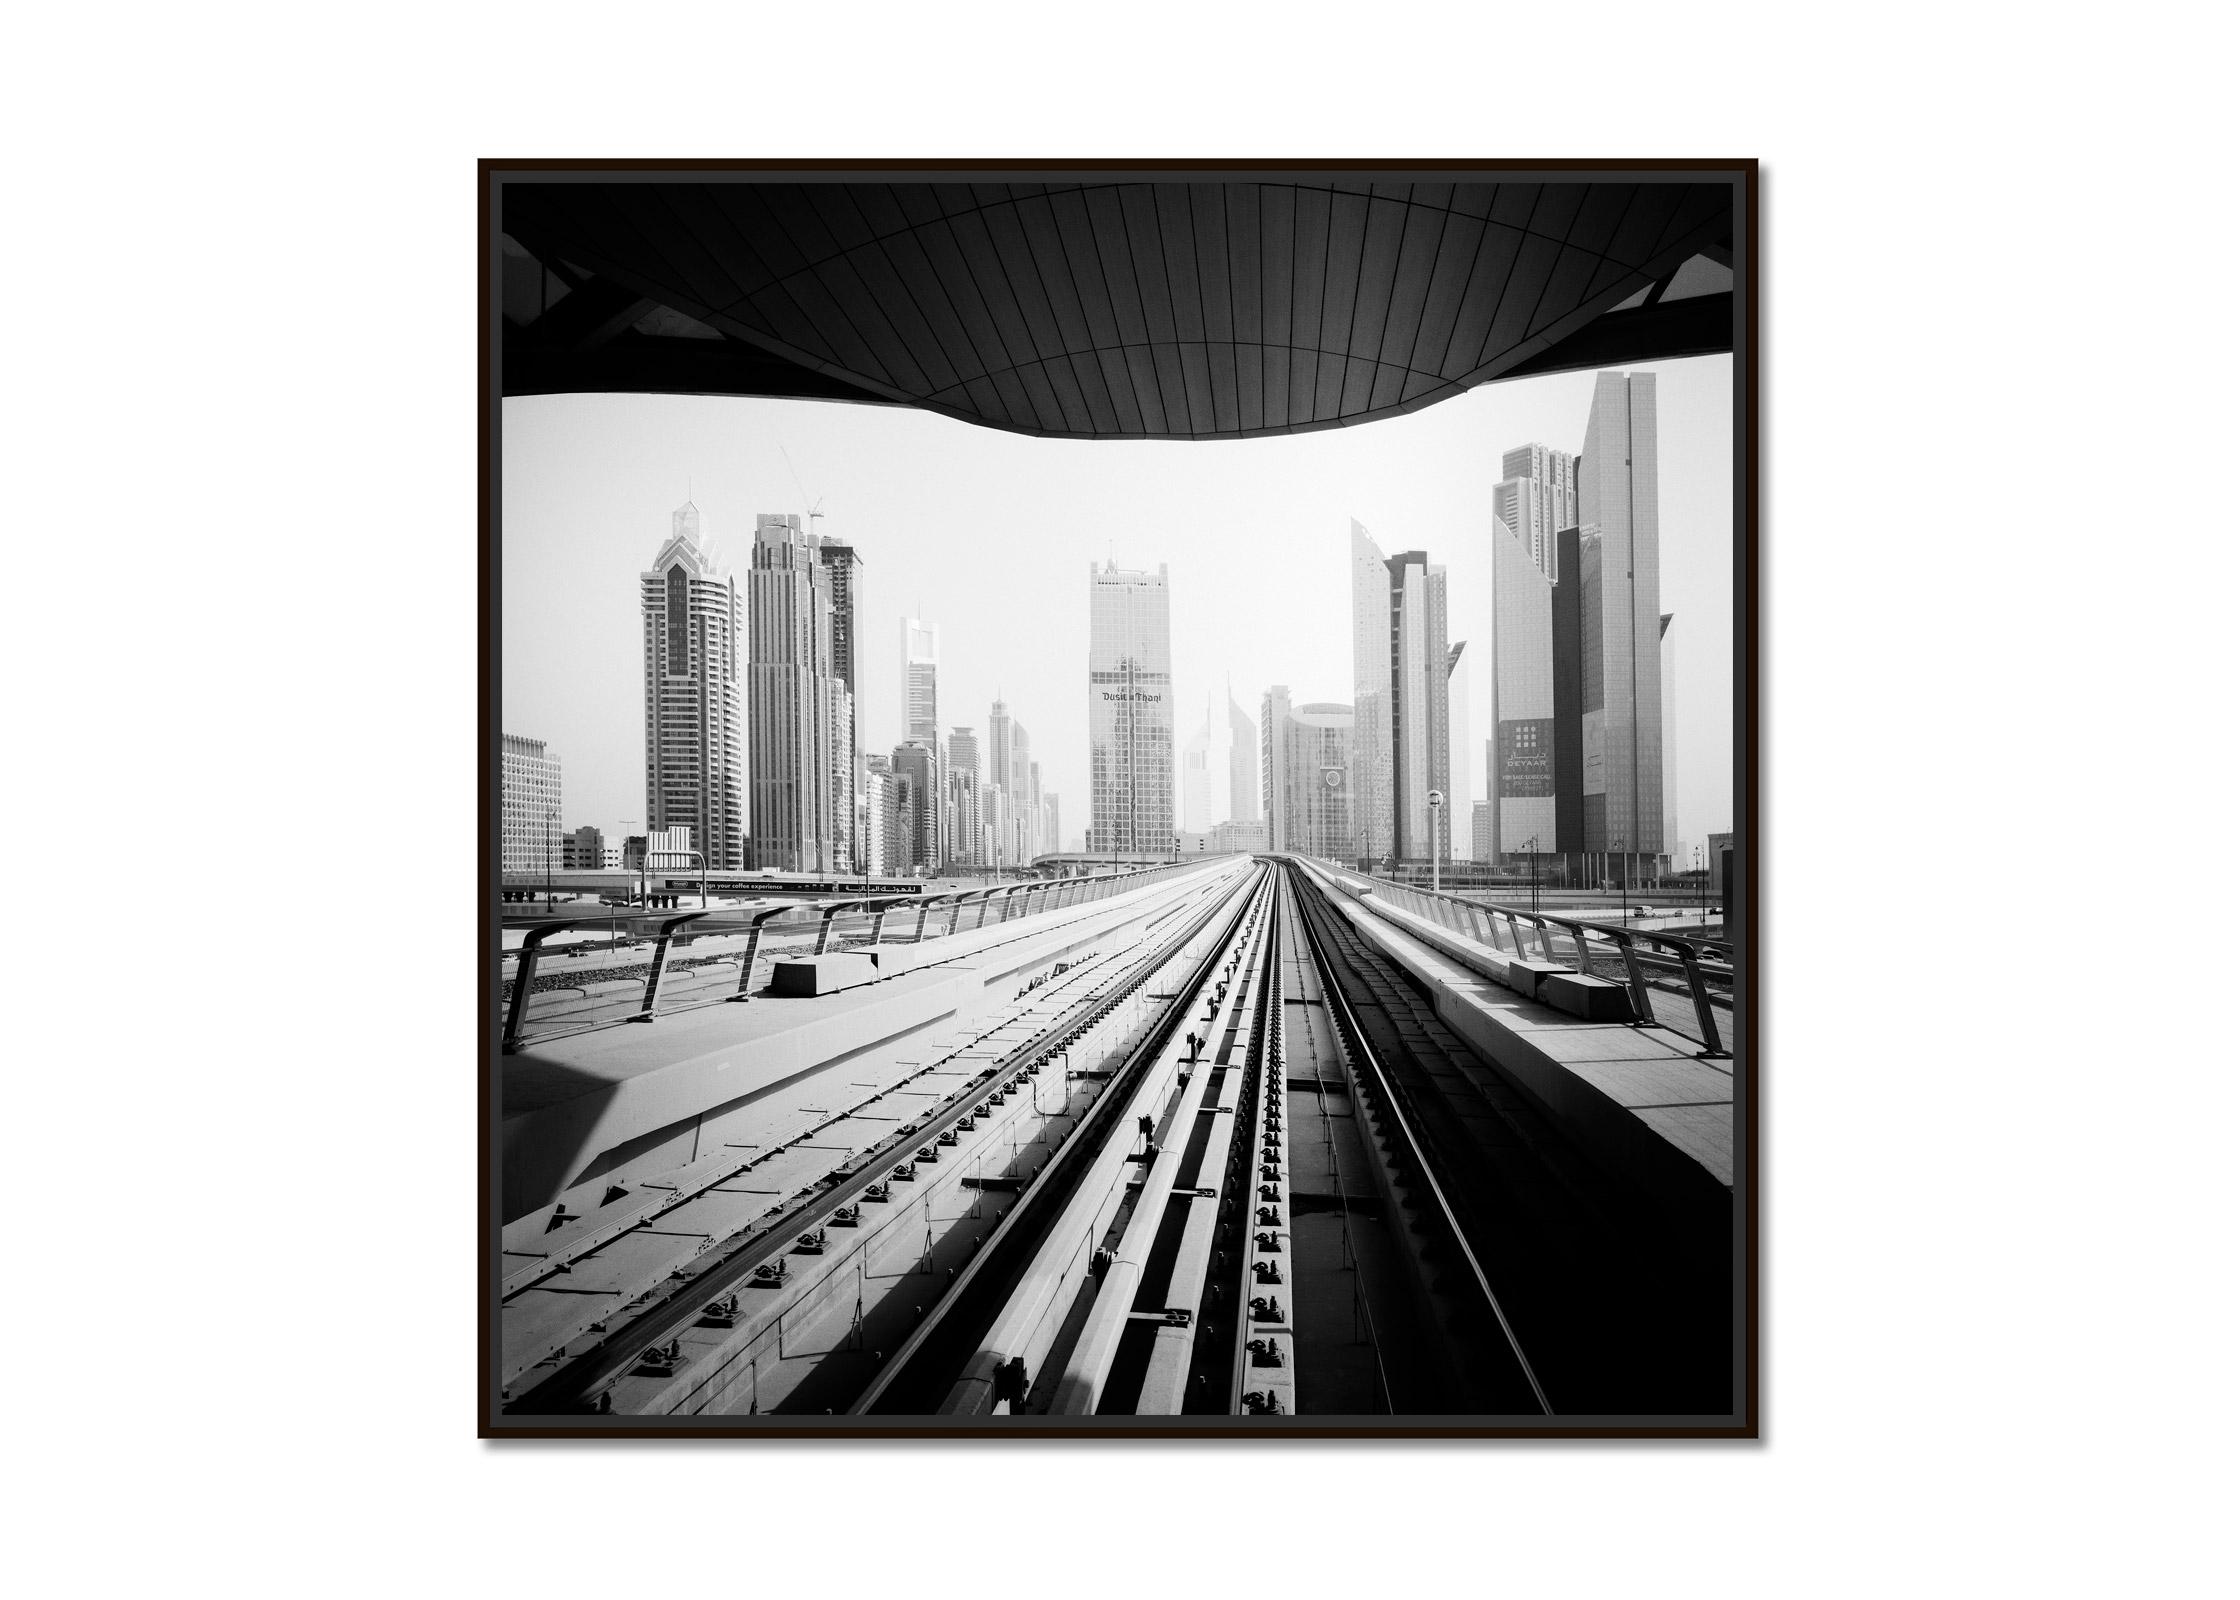 Dusit Thani, Dubai, Mega City, Skyscraper, Black and White cityscape photography - Photograph by Gerald Berghammer